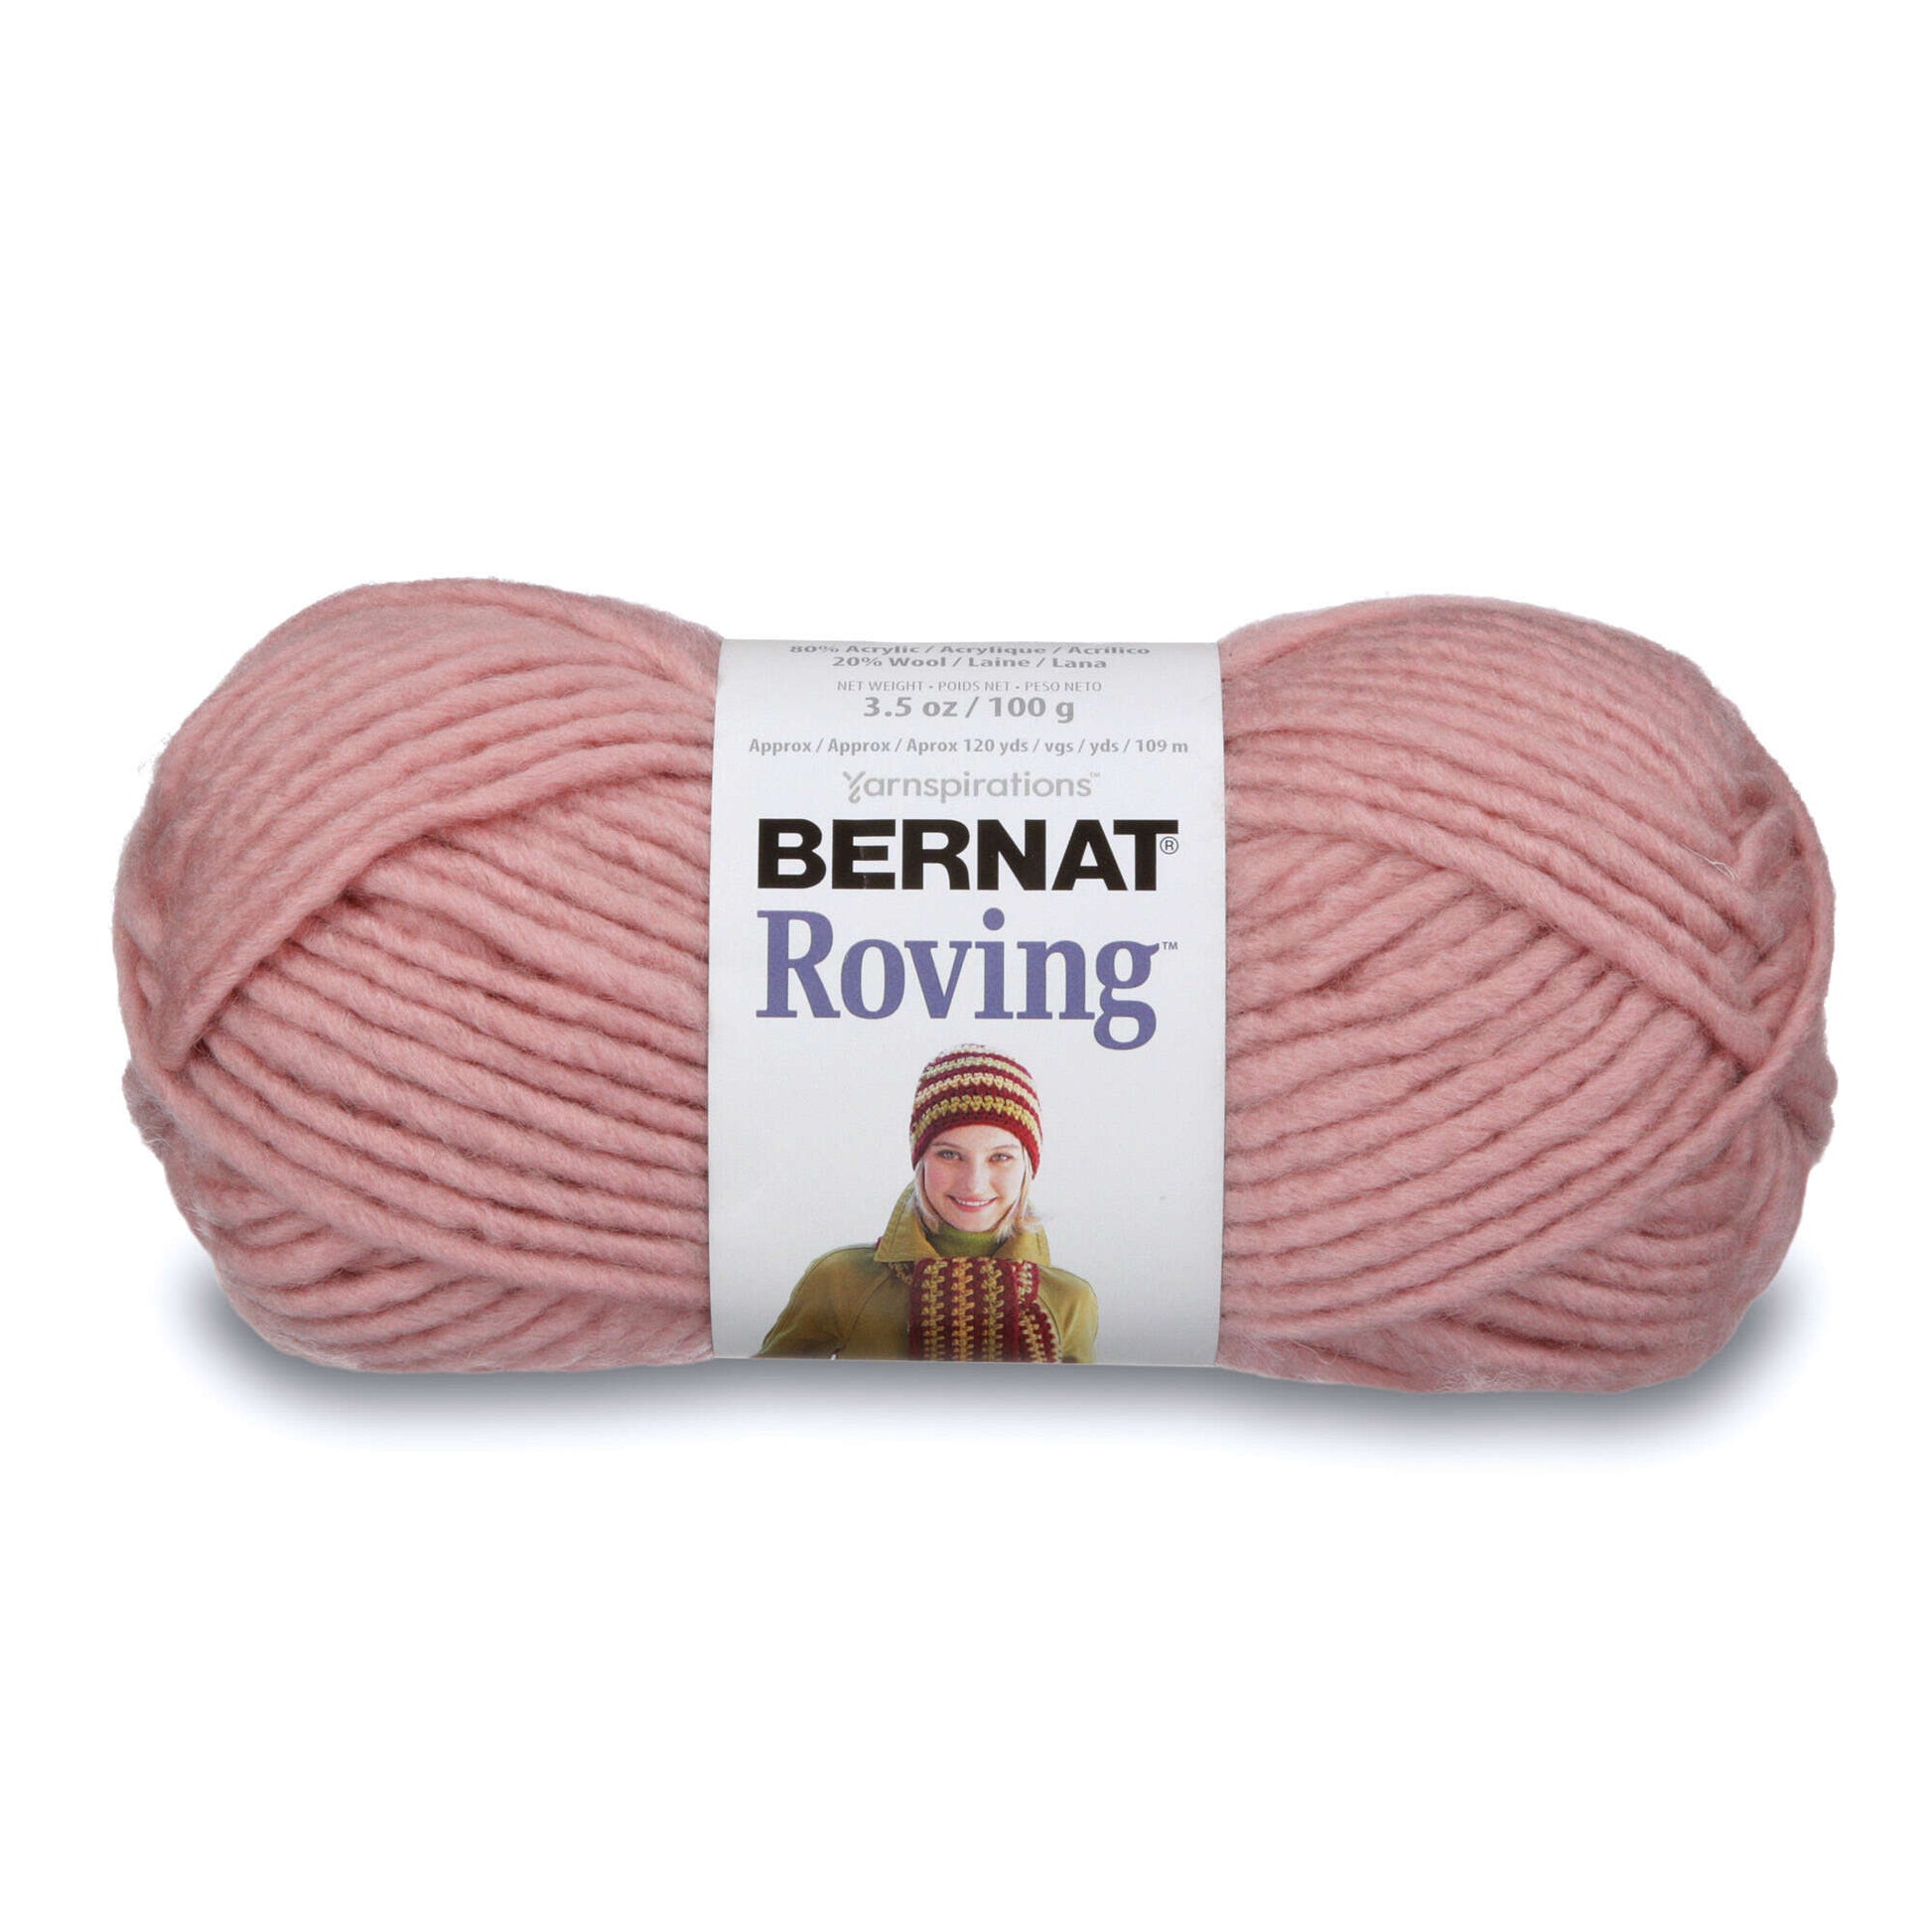 Bernat Roving Yarn - Clearance Shades